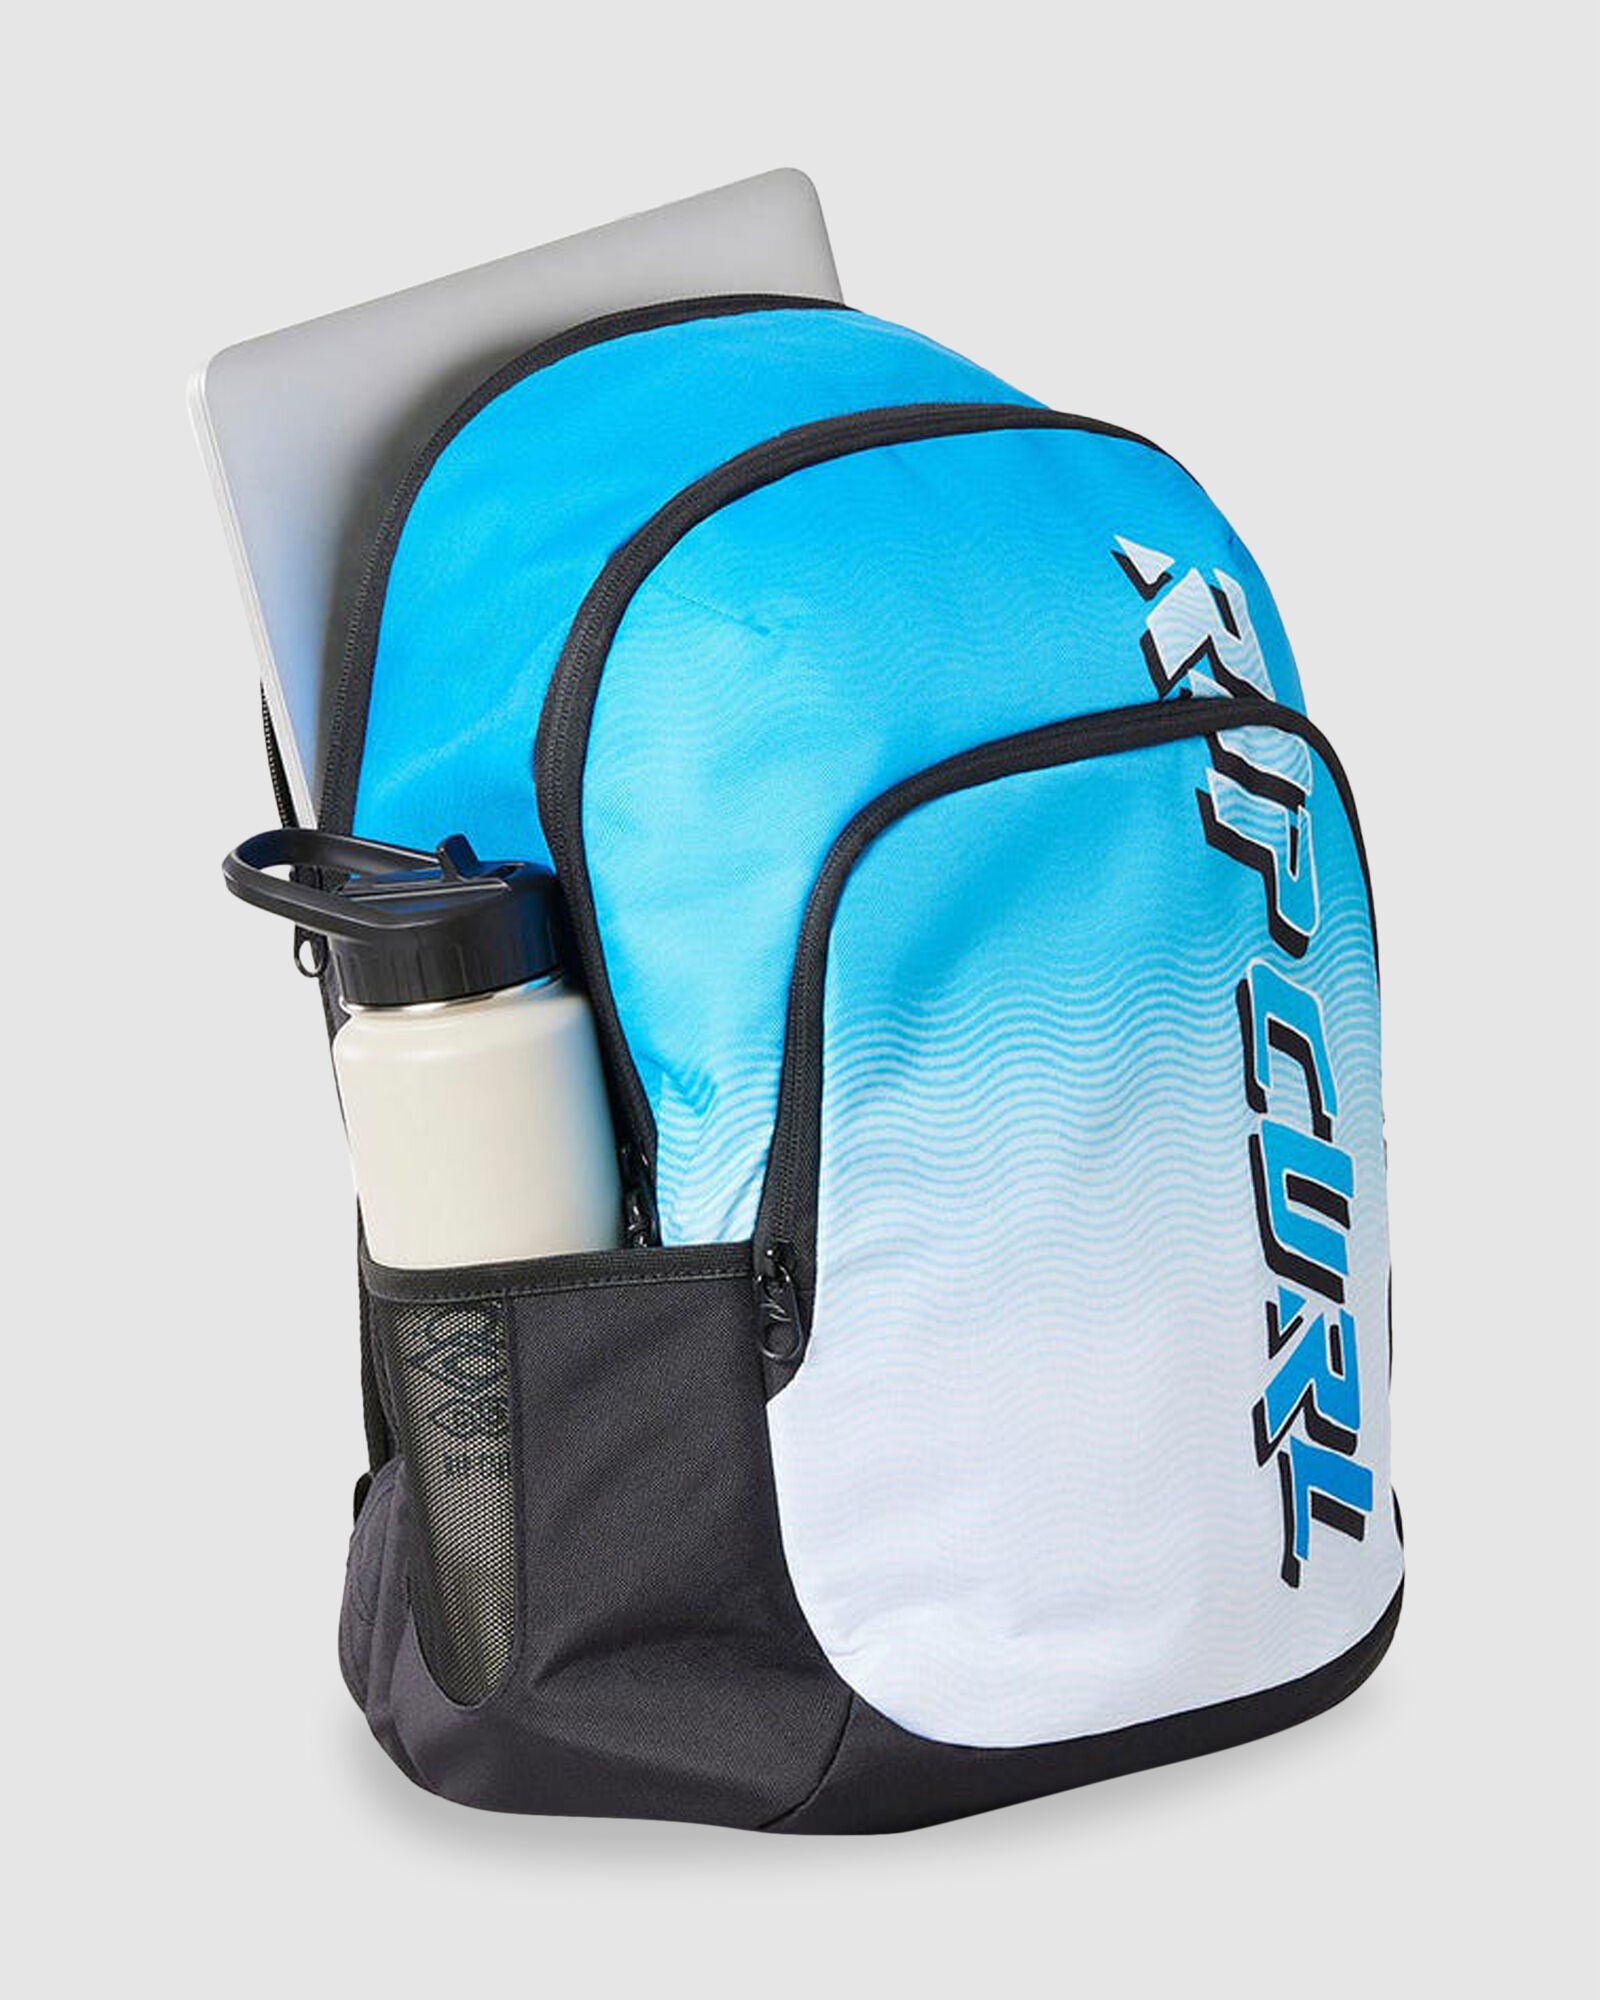 ozone 30l faded slant aqua ripcurl blue white mens back pack back to school laptop compartment